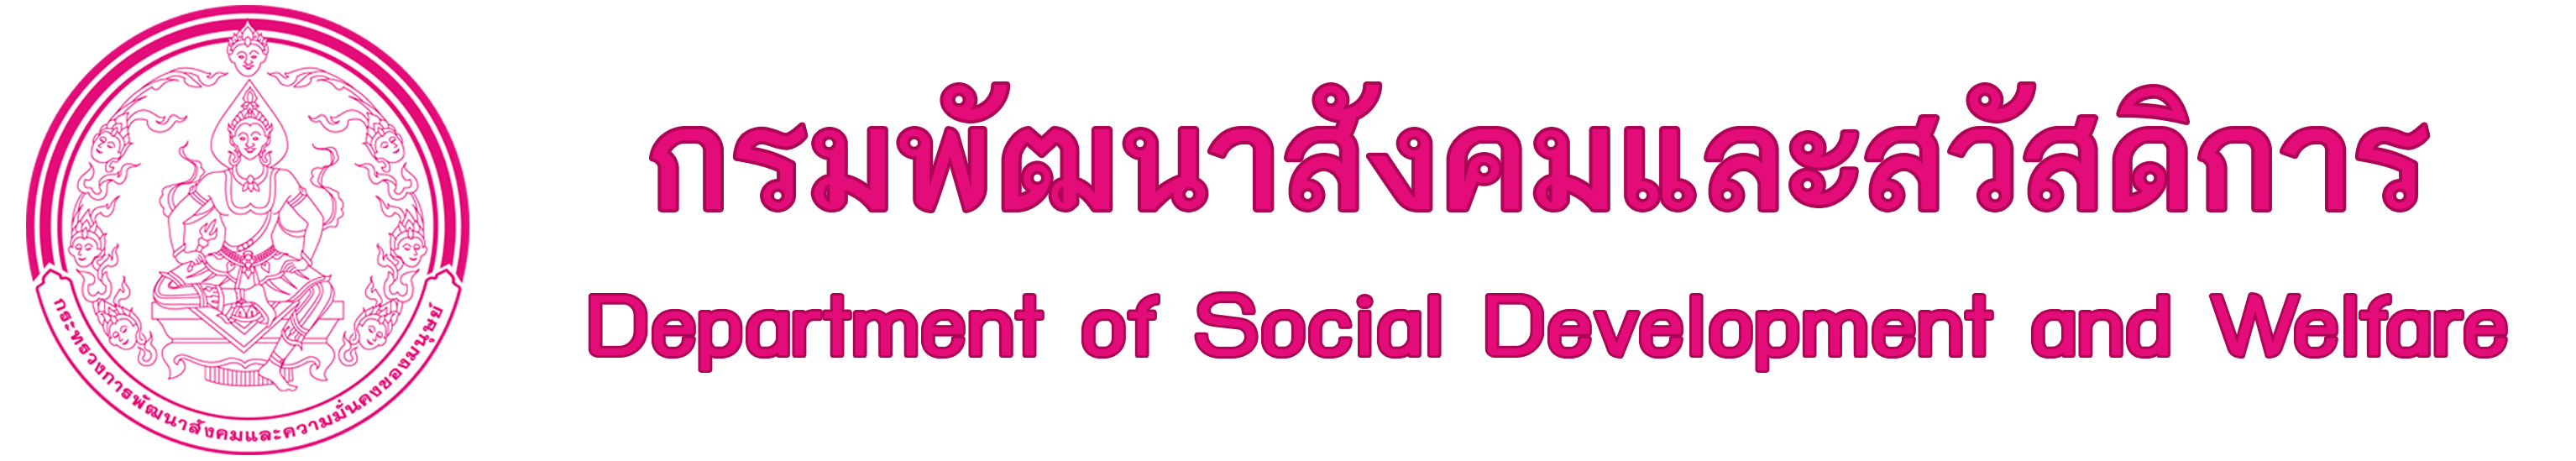 Department of Social Development and Welfare